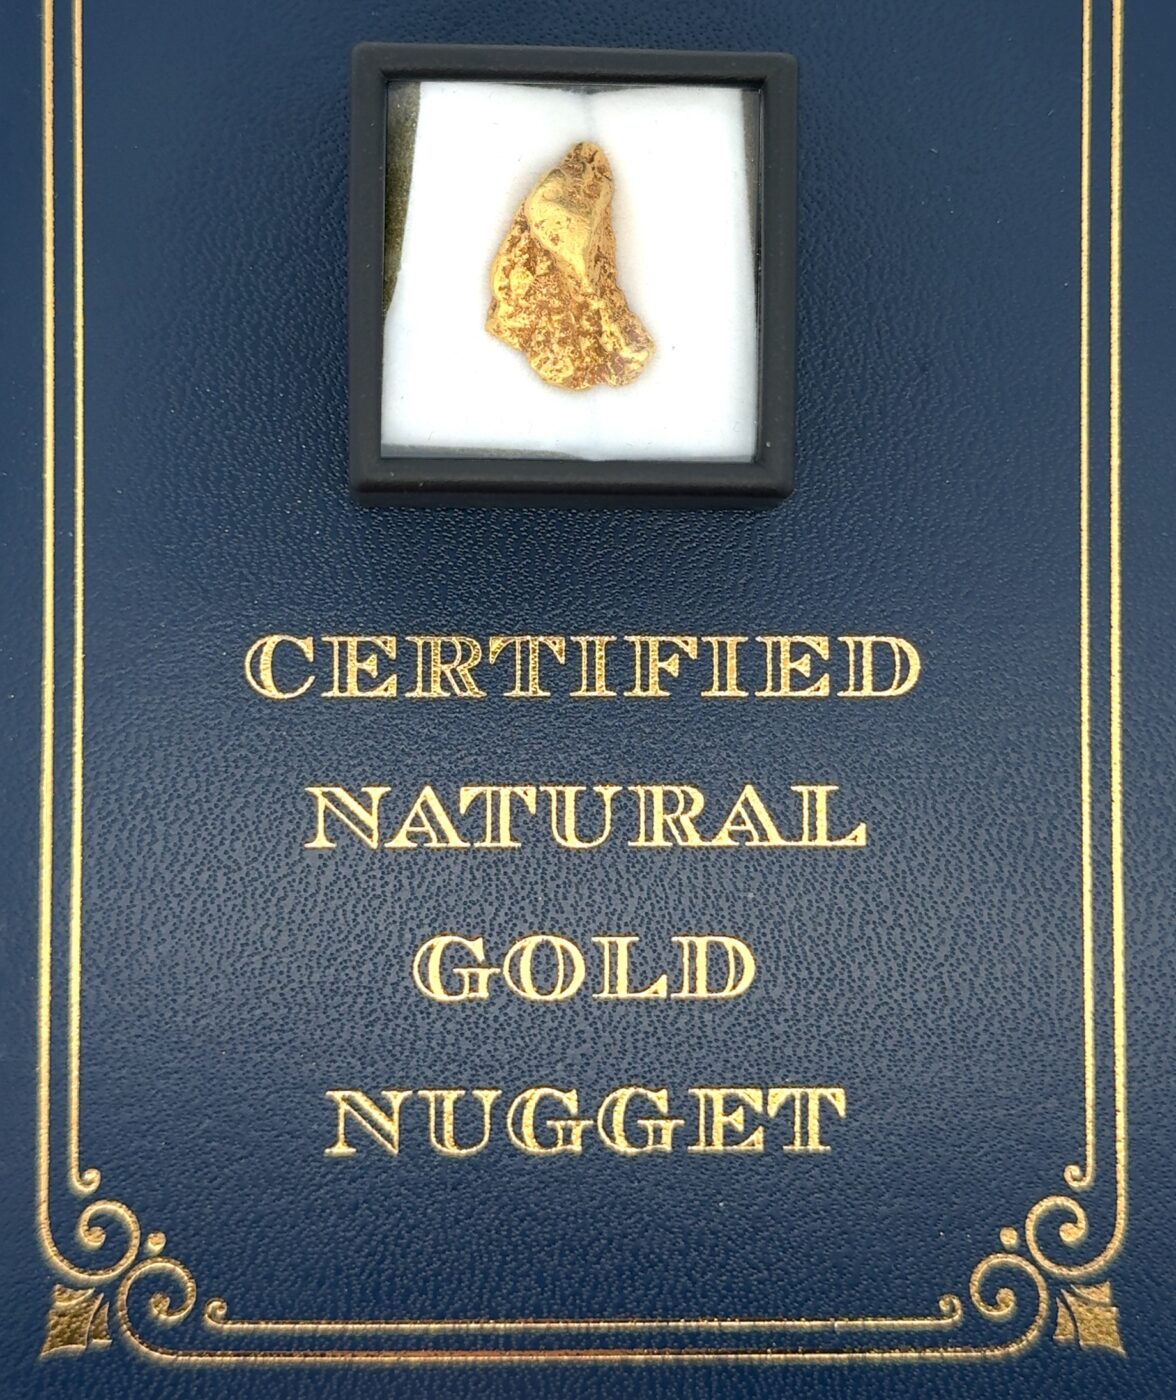 7.3 Gram Natural Gold Nugget from Moose Creek, Alaska, Alaska Mint